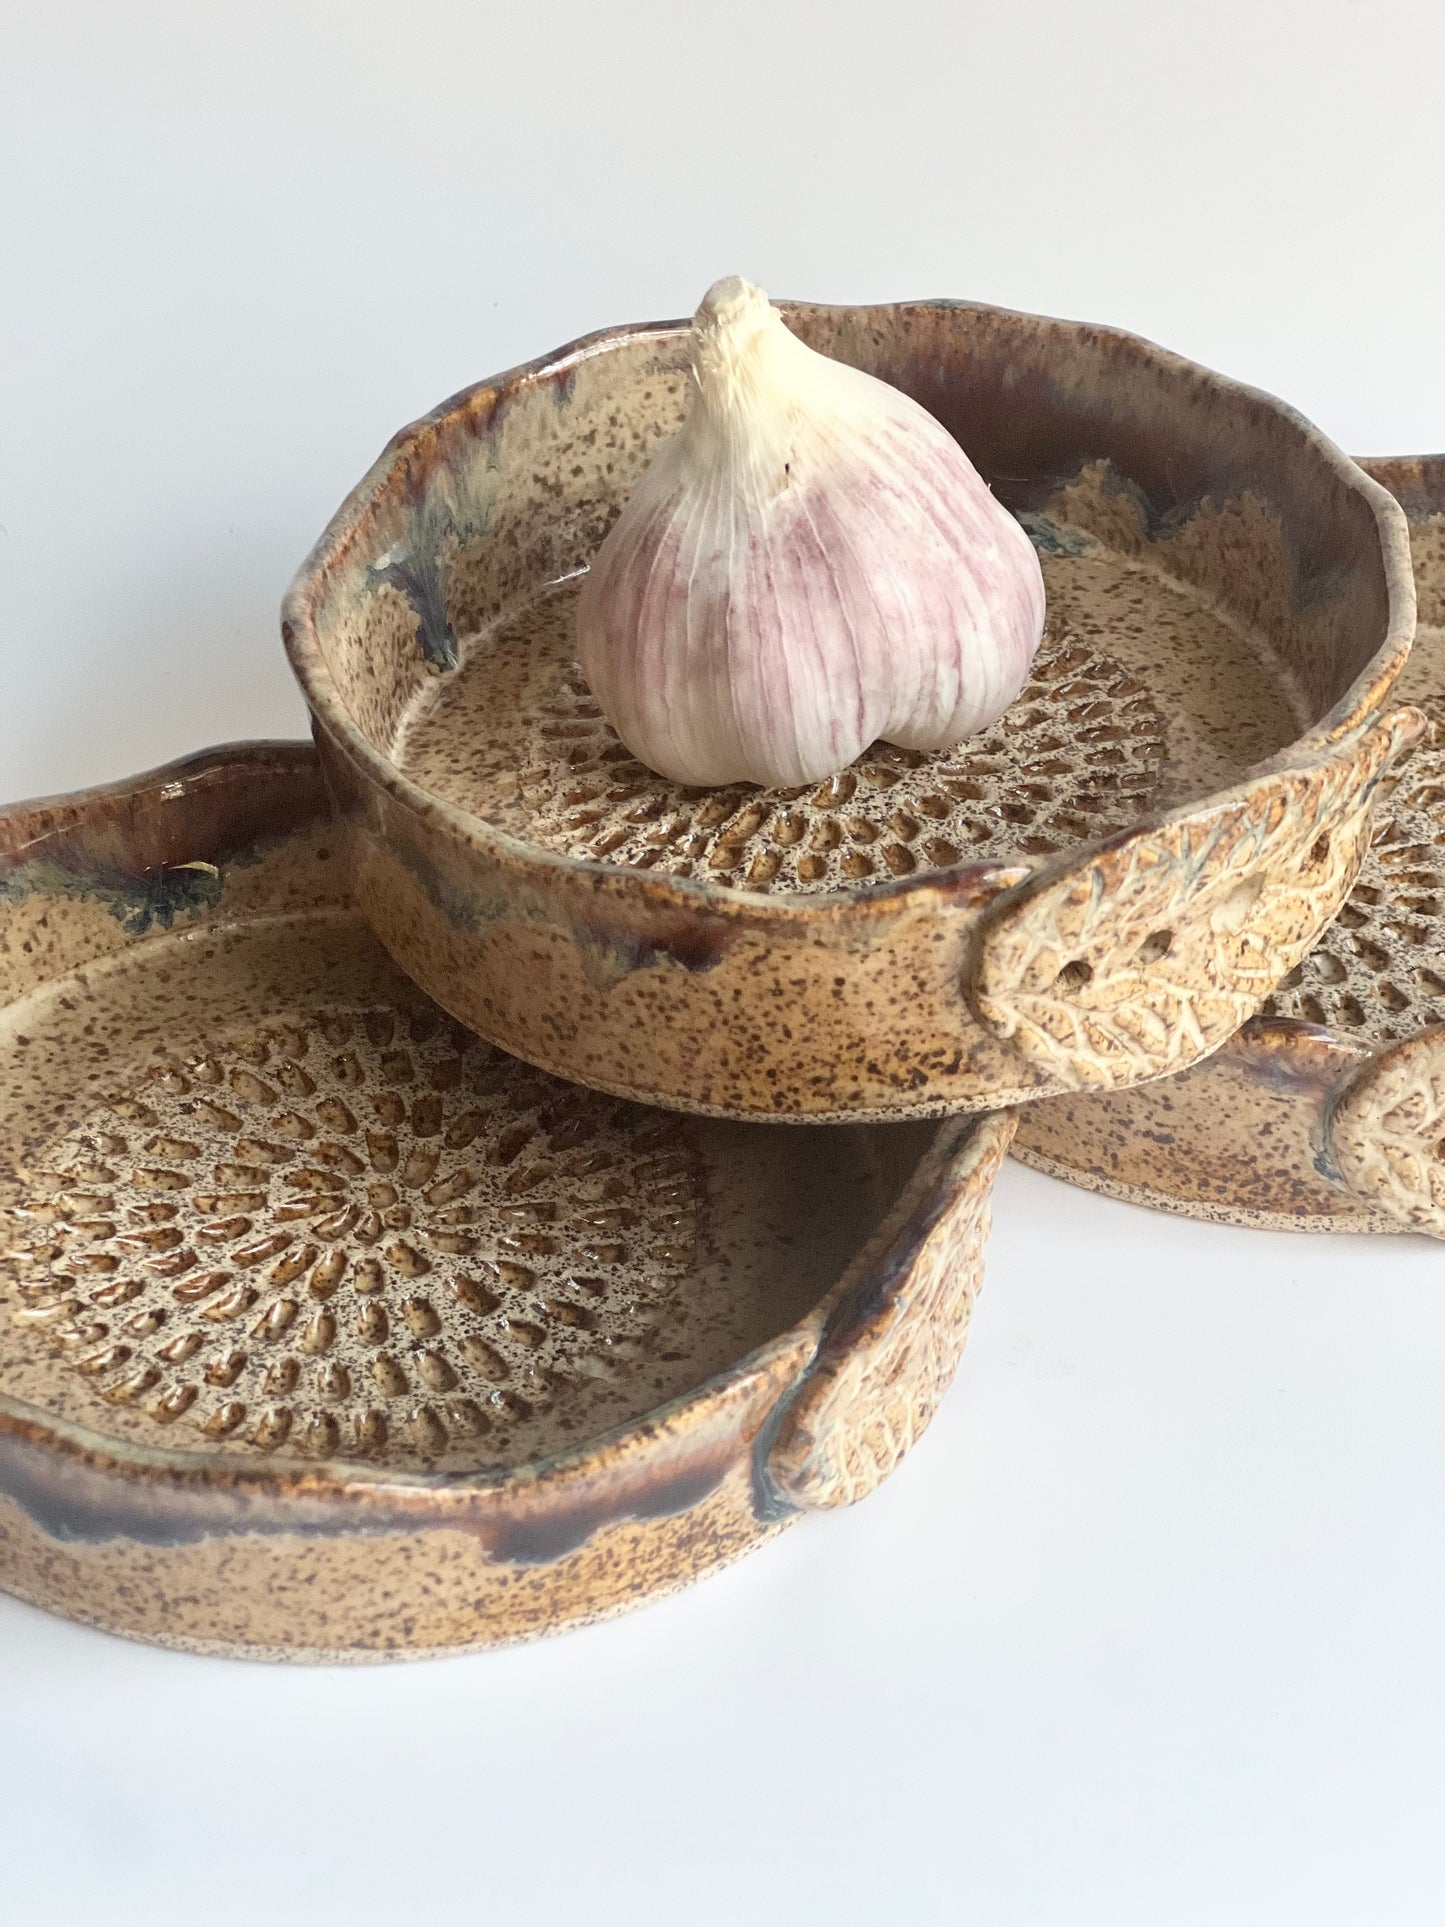 Ceramic "Triple Threat" (Garlic Grating, Herb Stripper, Infused Oil Making Dish)